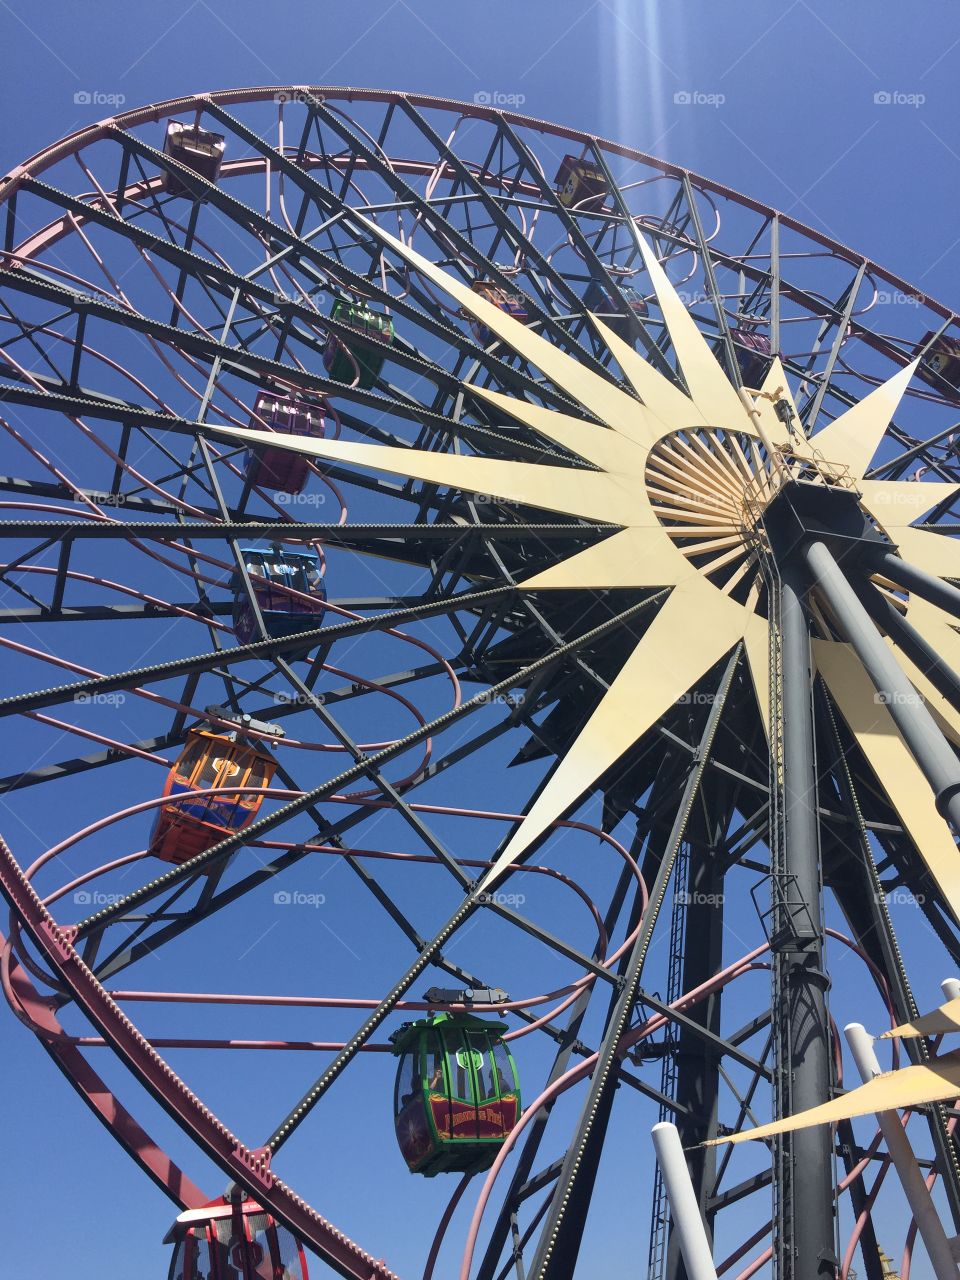 DCA Ferris wheel 